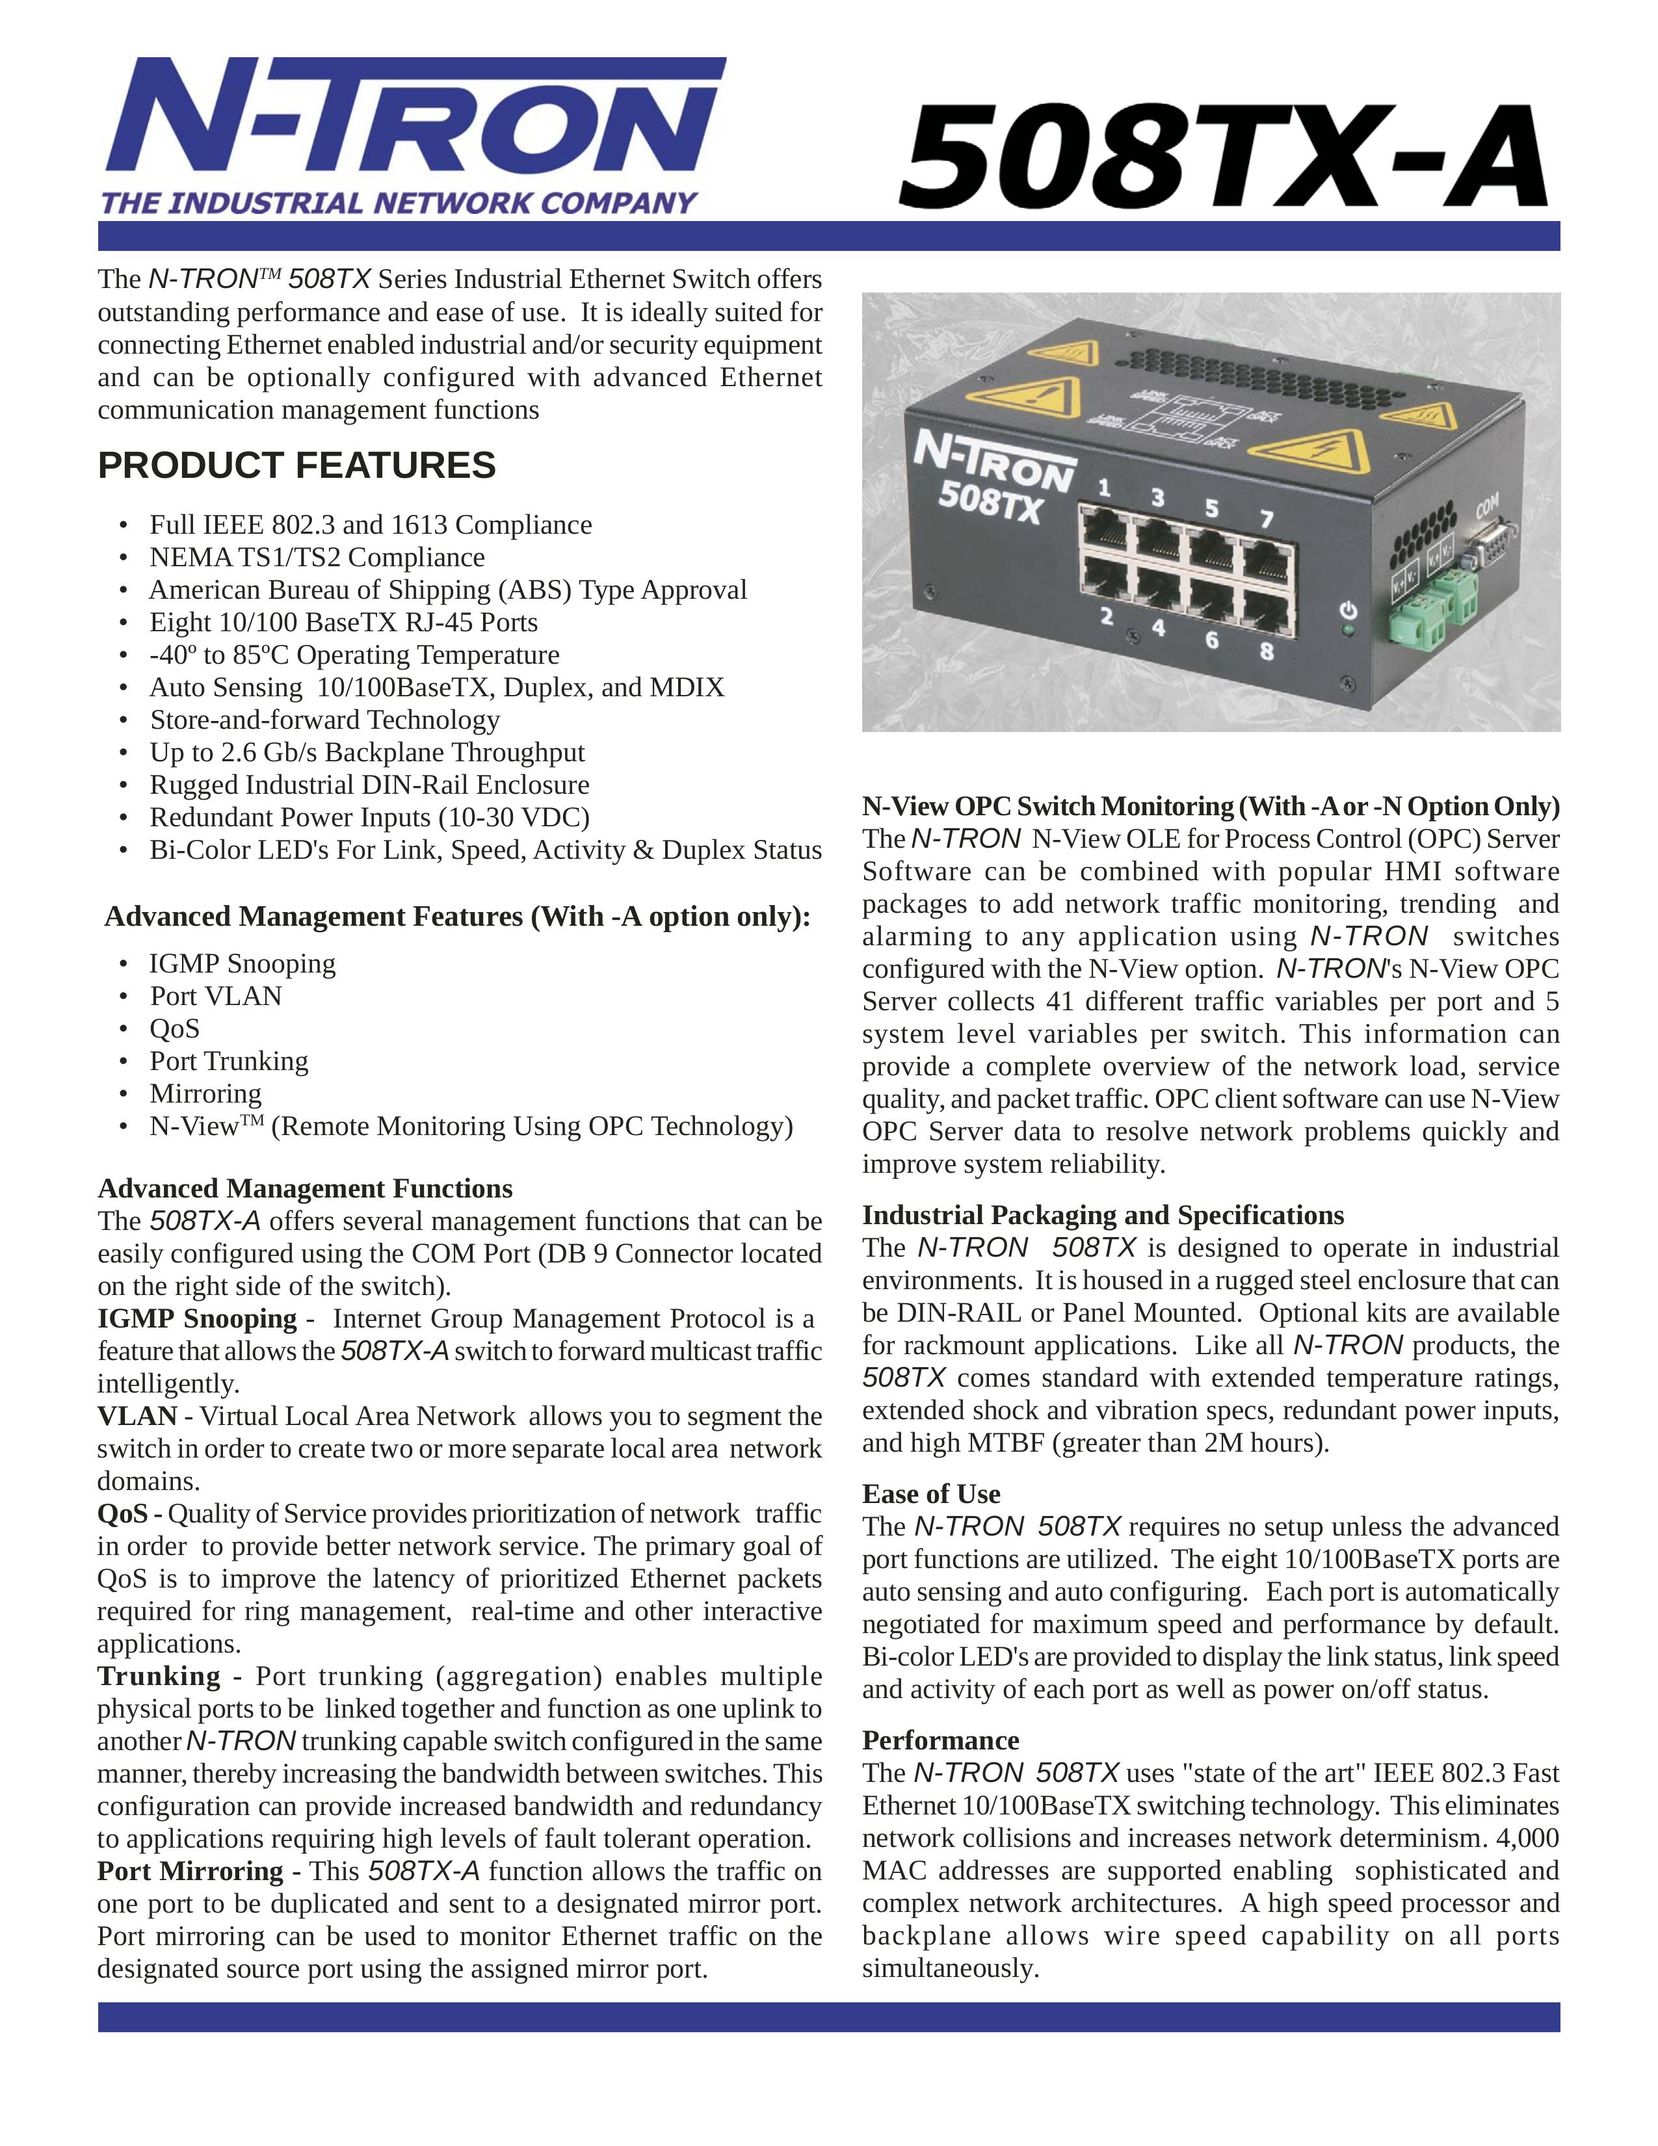 N-Tron 508TX-A Switch User Manual